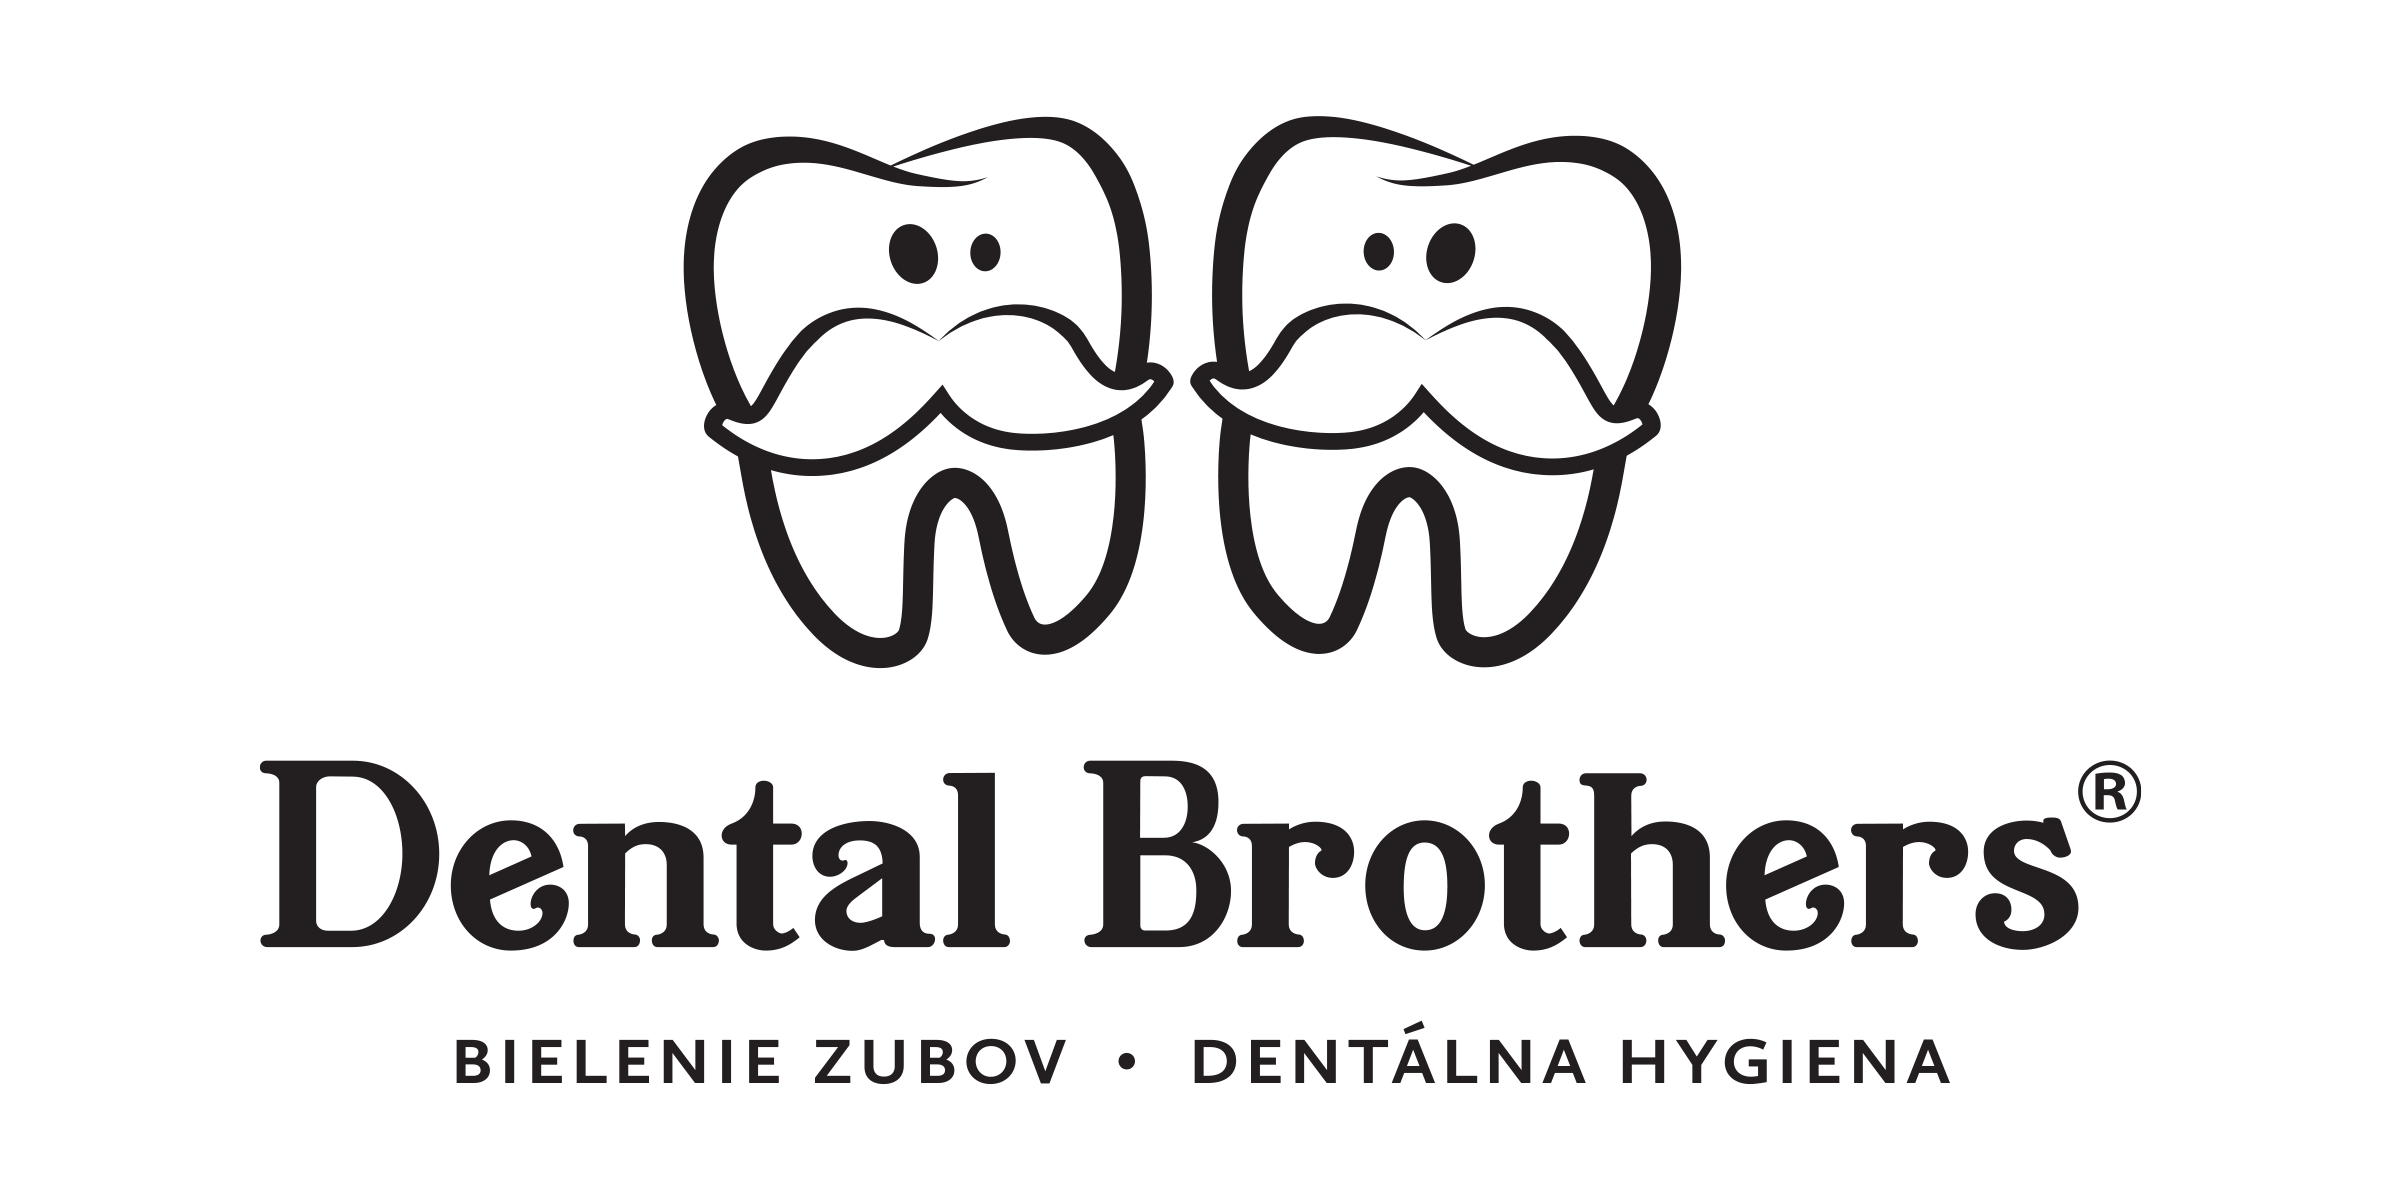 Dental Brothers